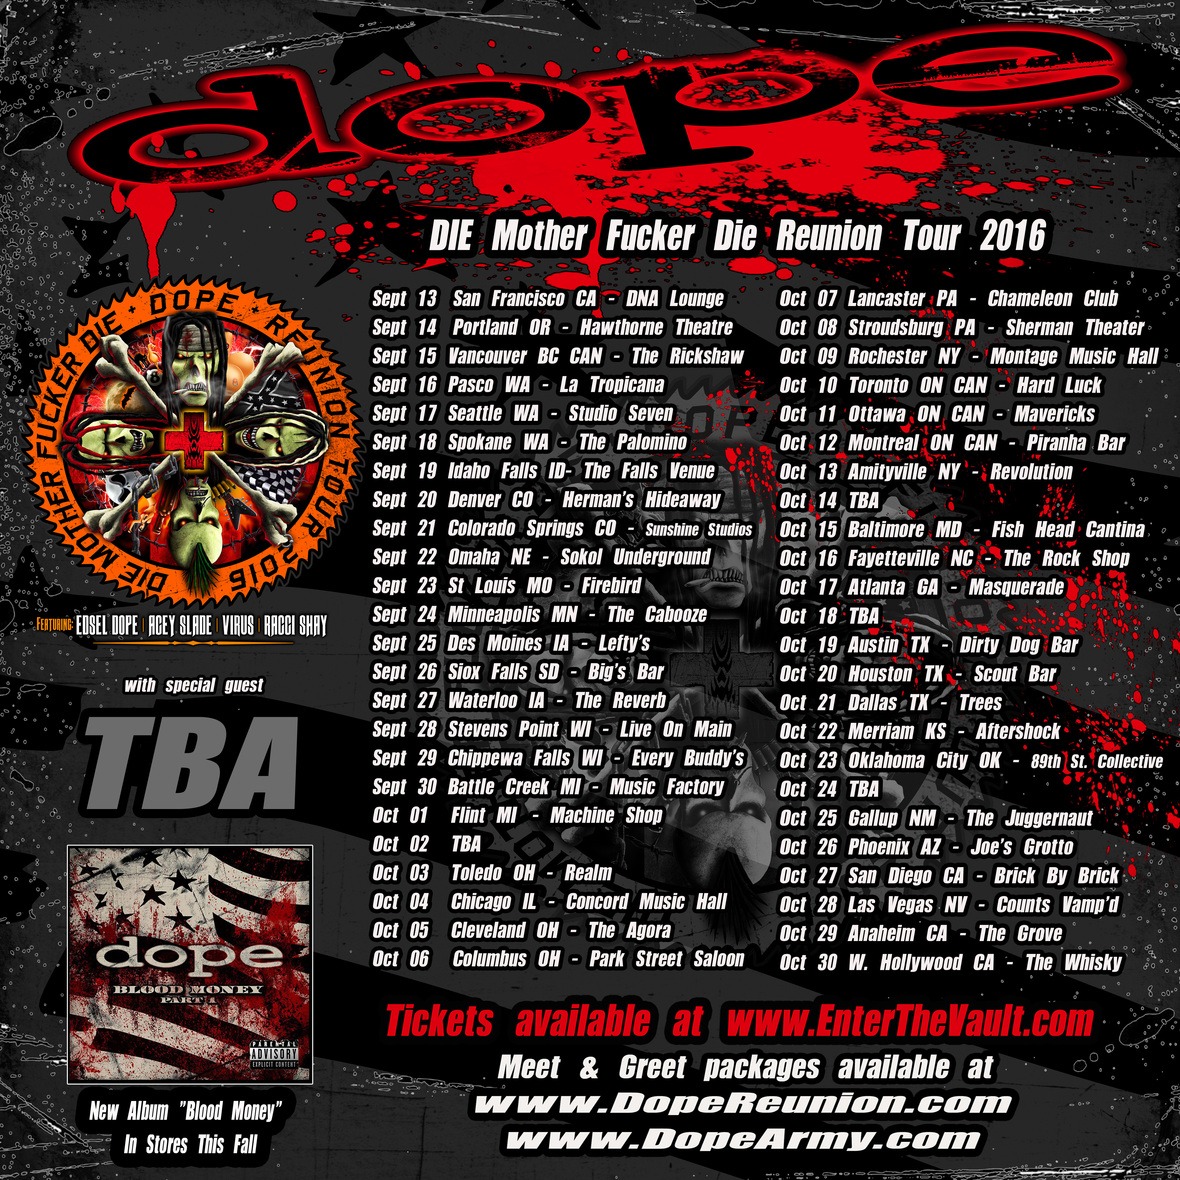 DOPE Announces Dates For "Die Mother Fucker Die" Reunion Tour